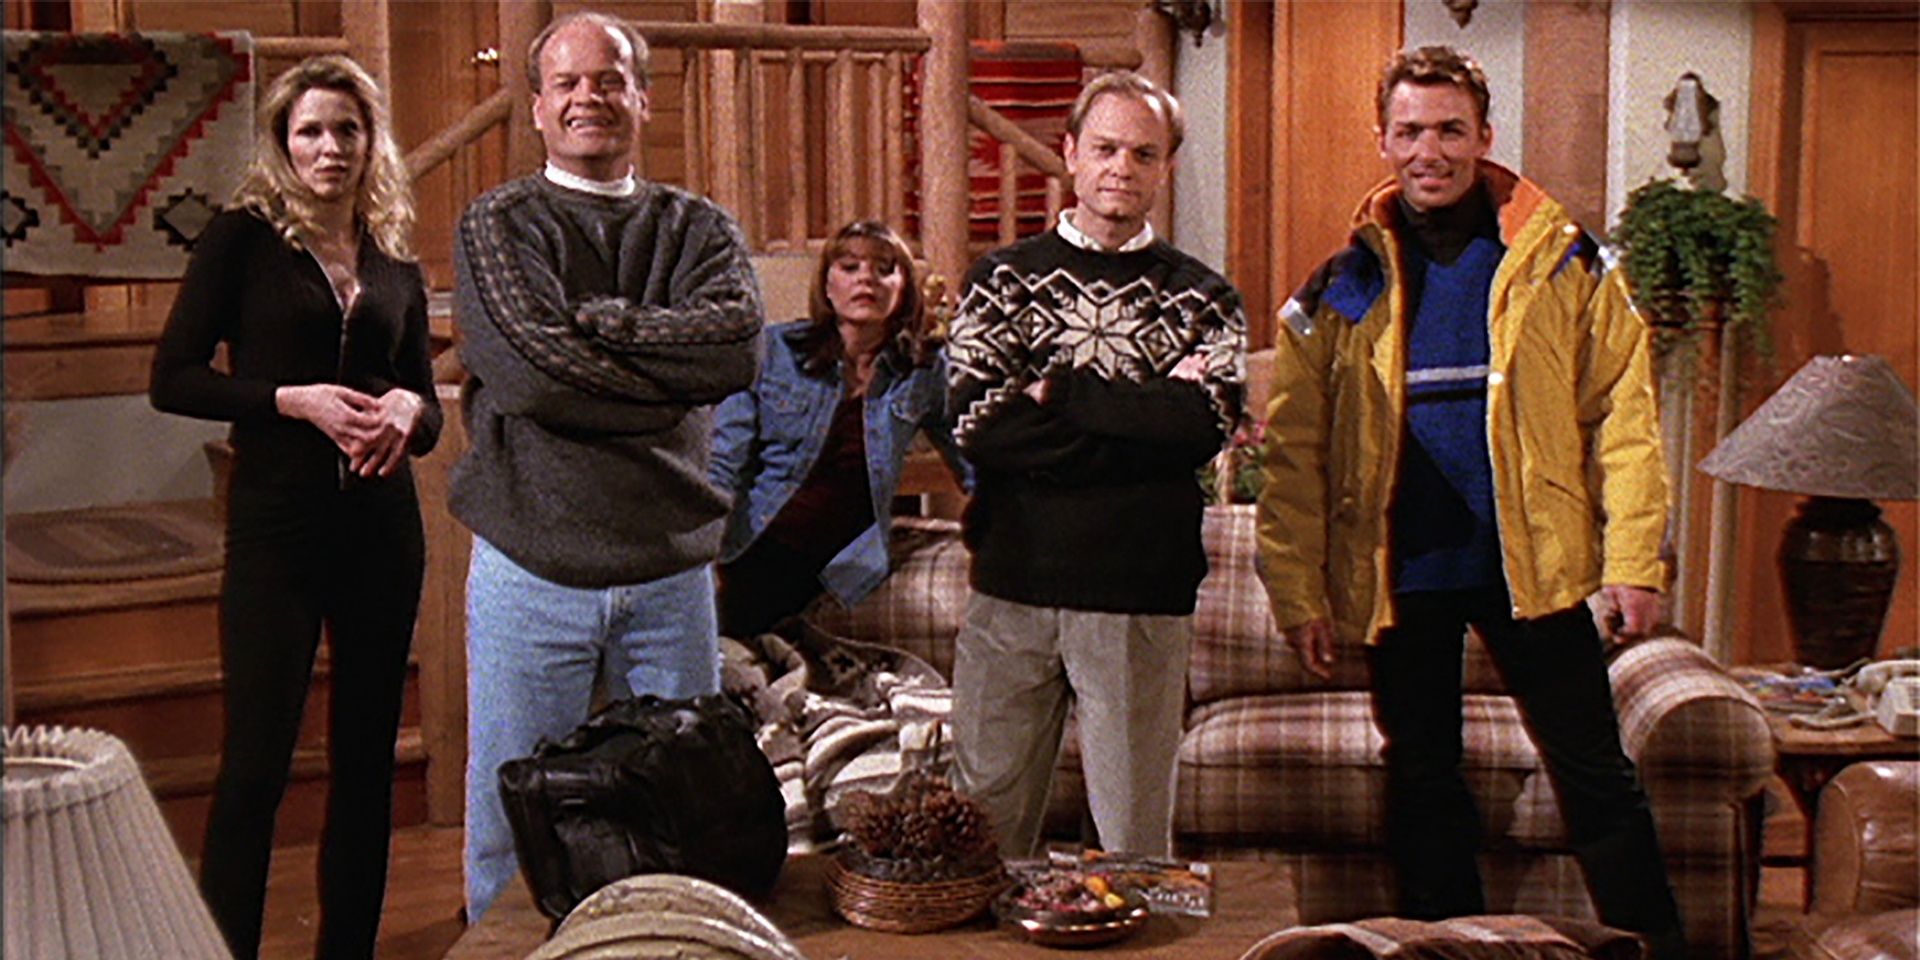 Annie, Frasier Crane, Daphne Moon, Niles Crane and Guy in "The Ski Lodge" on Frasier